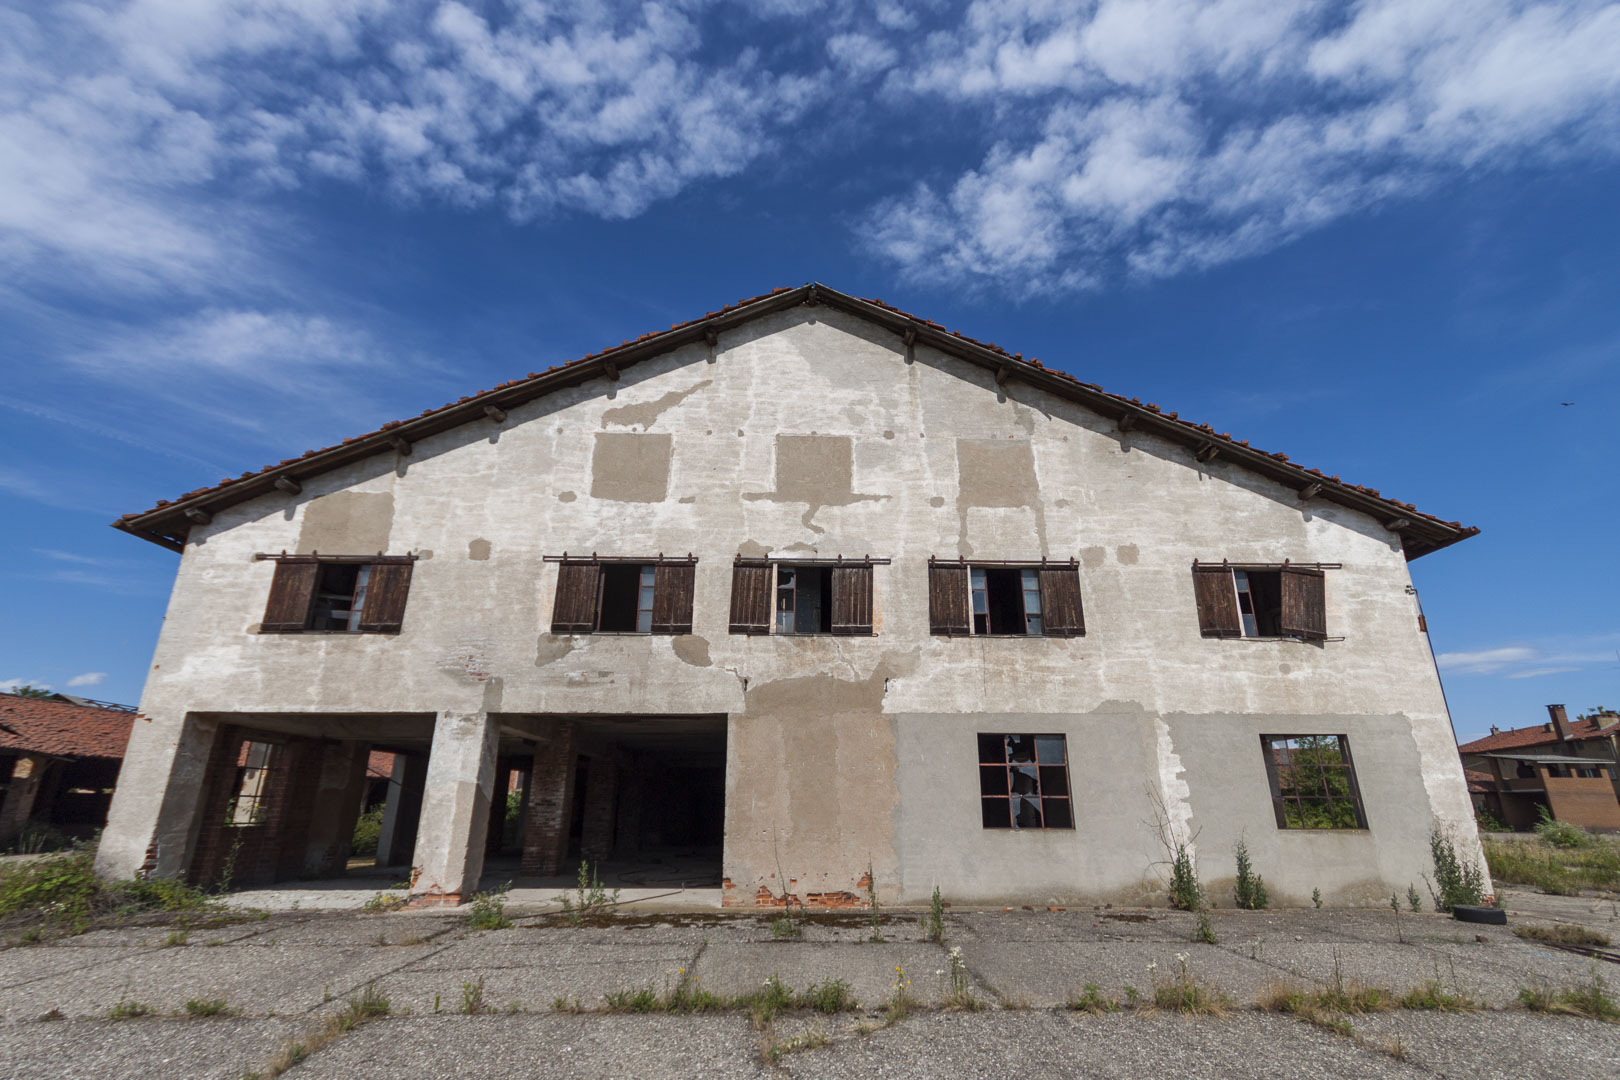 Abandoned “Beldi” Furnace – Novara, Italy